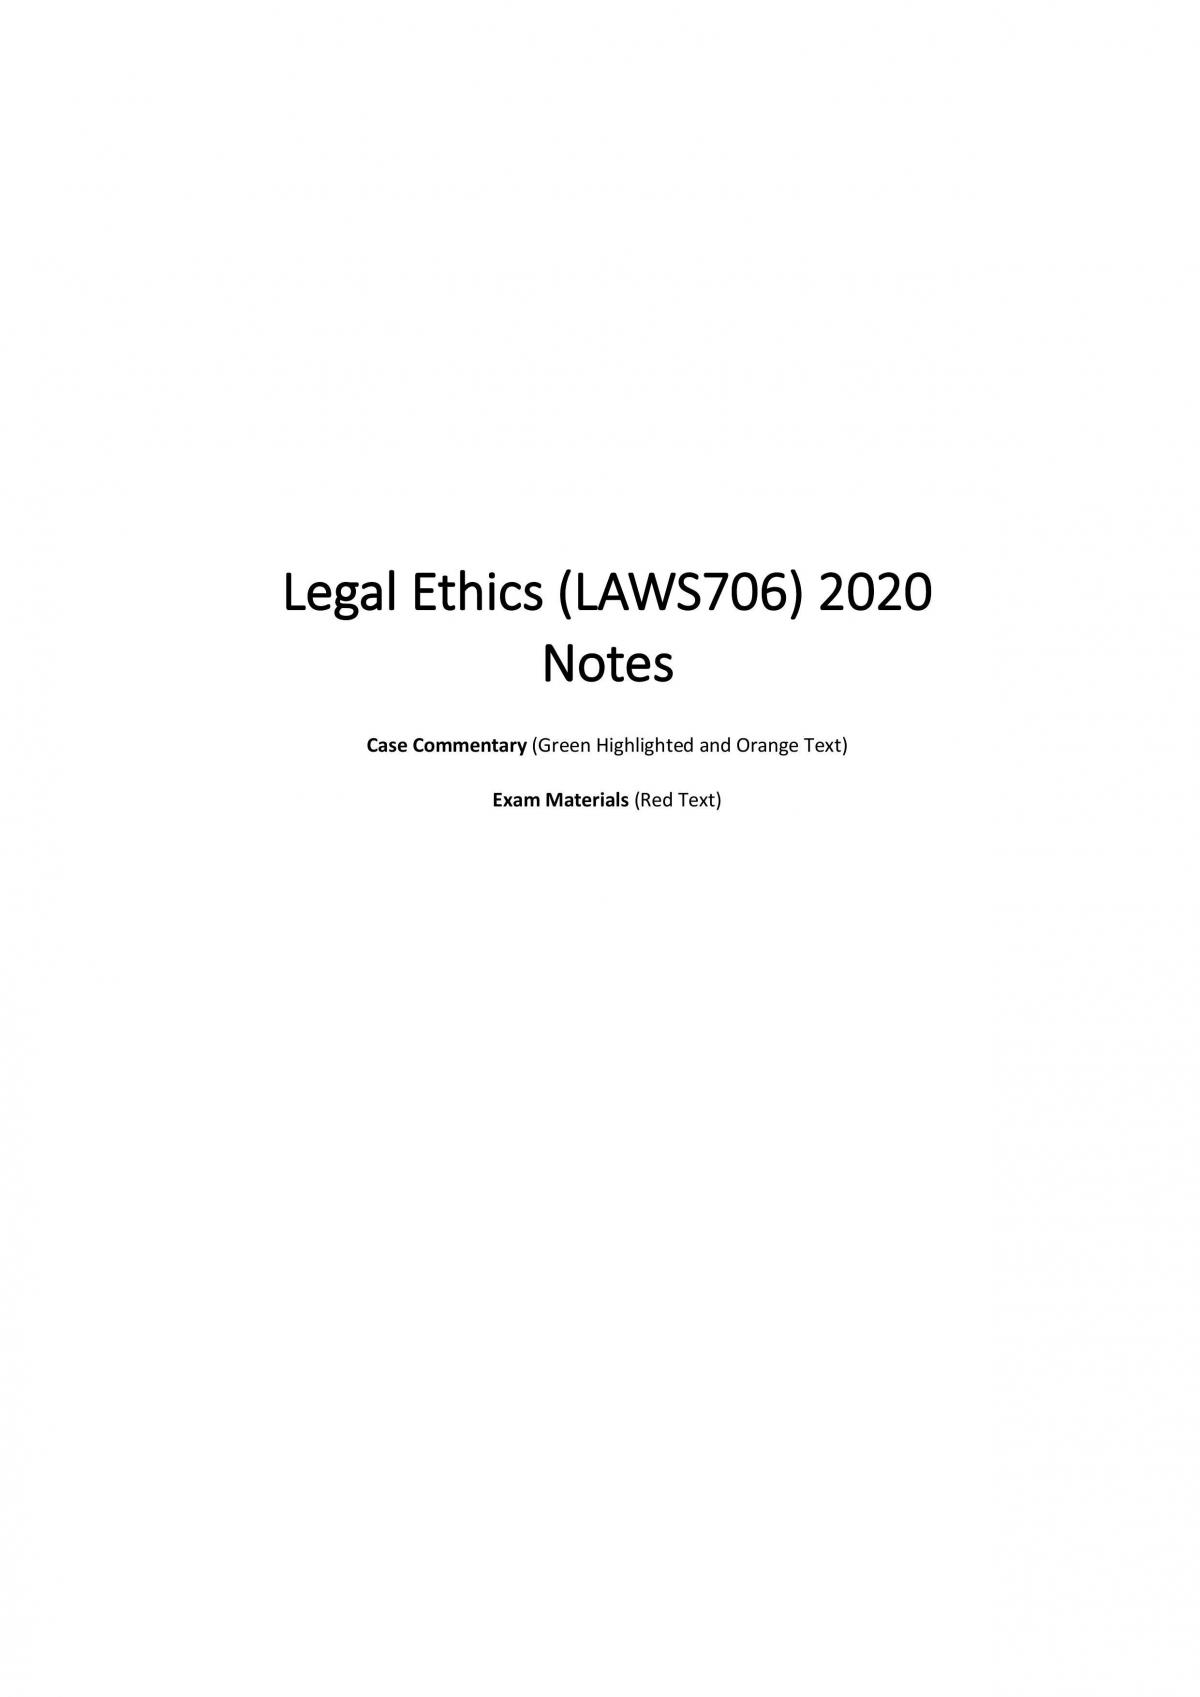 Legal Ethics Week 1 to Week 10 - Page 1